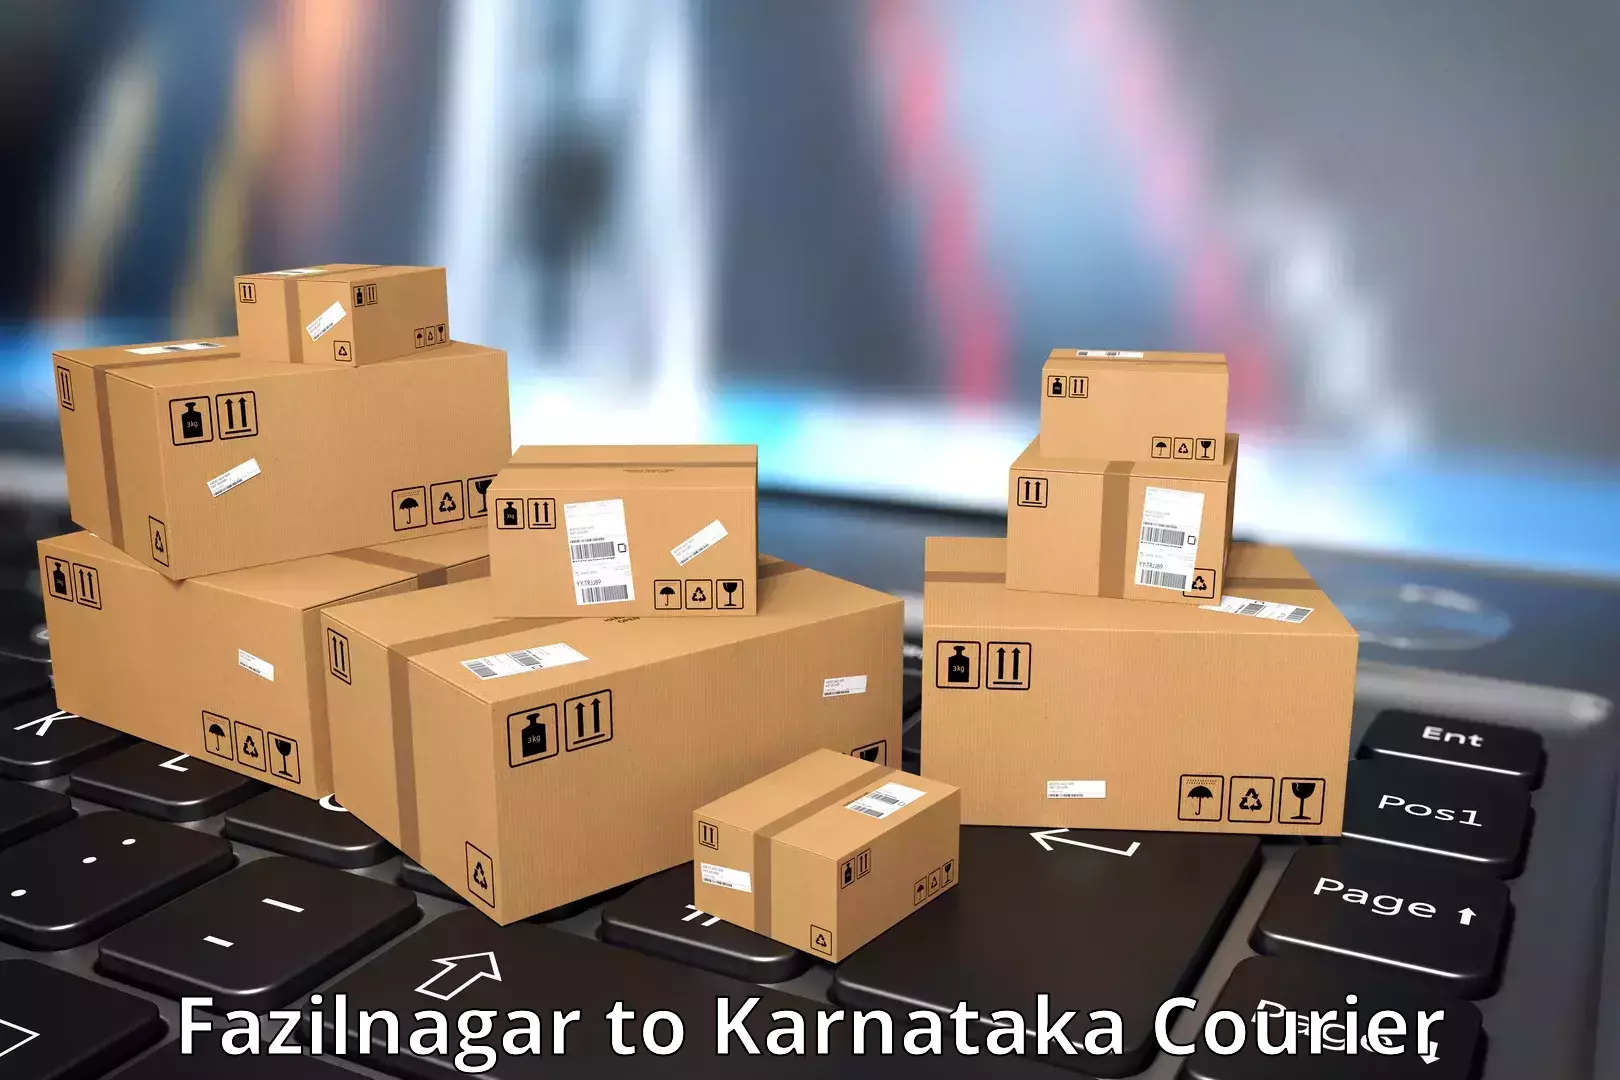 Online package tracking Fazilnagar to Ballari